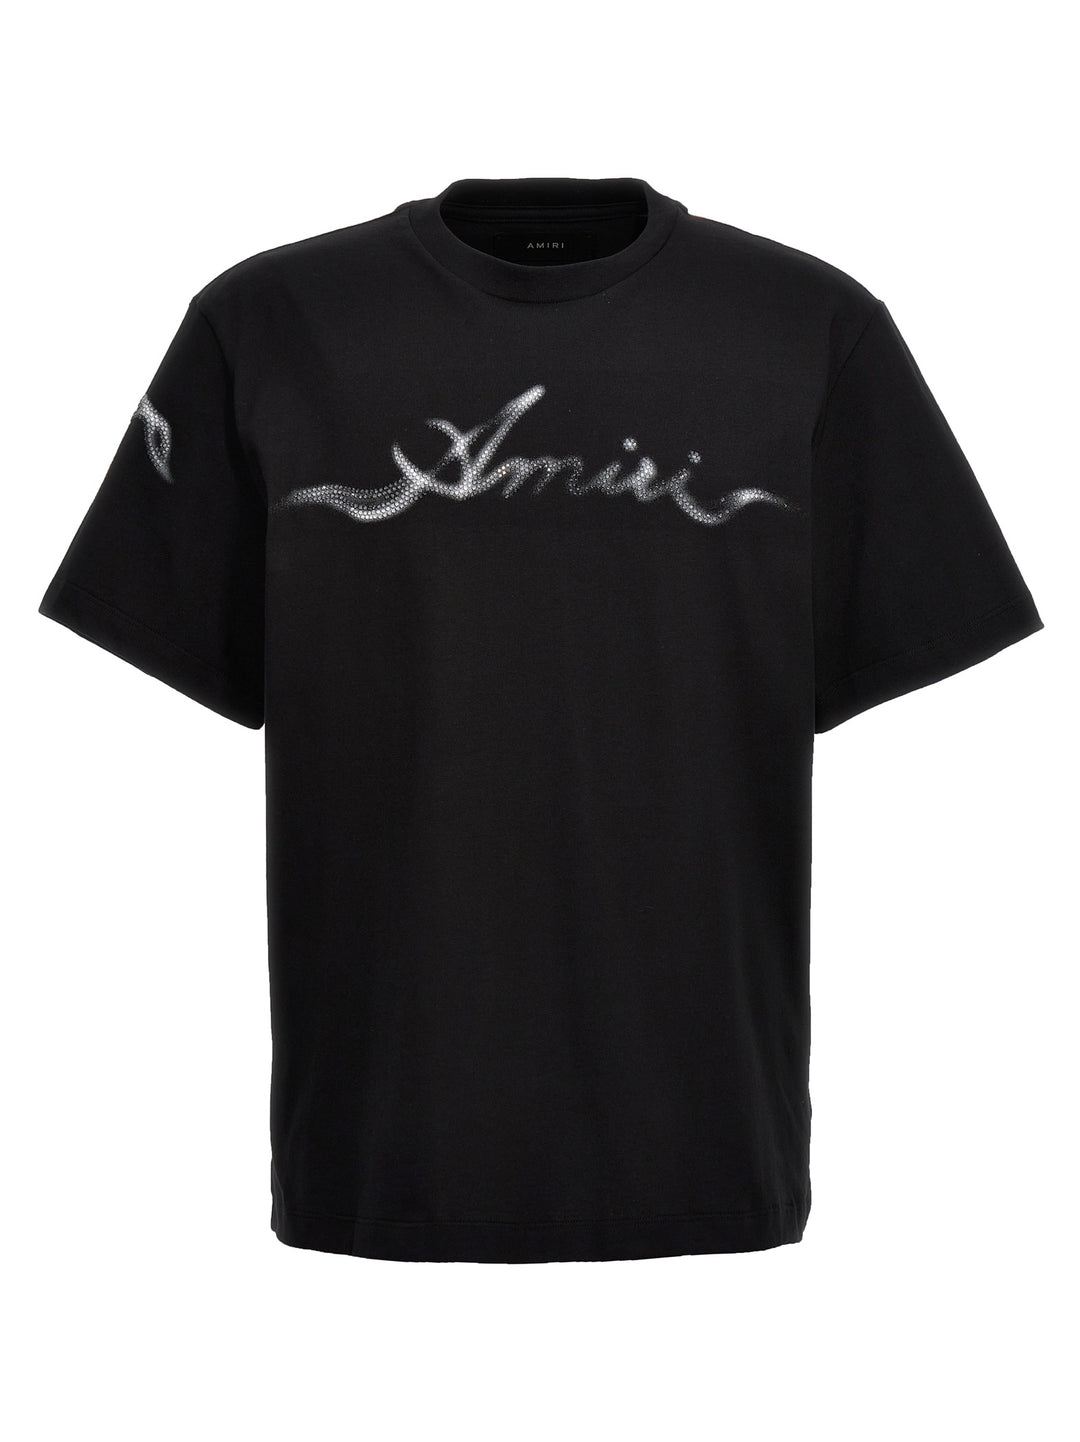 Amiri Smoke T Shirt Nero